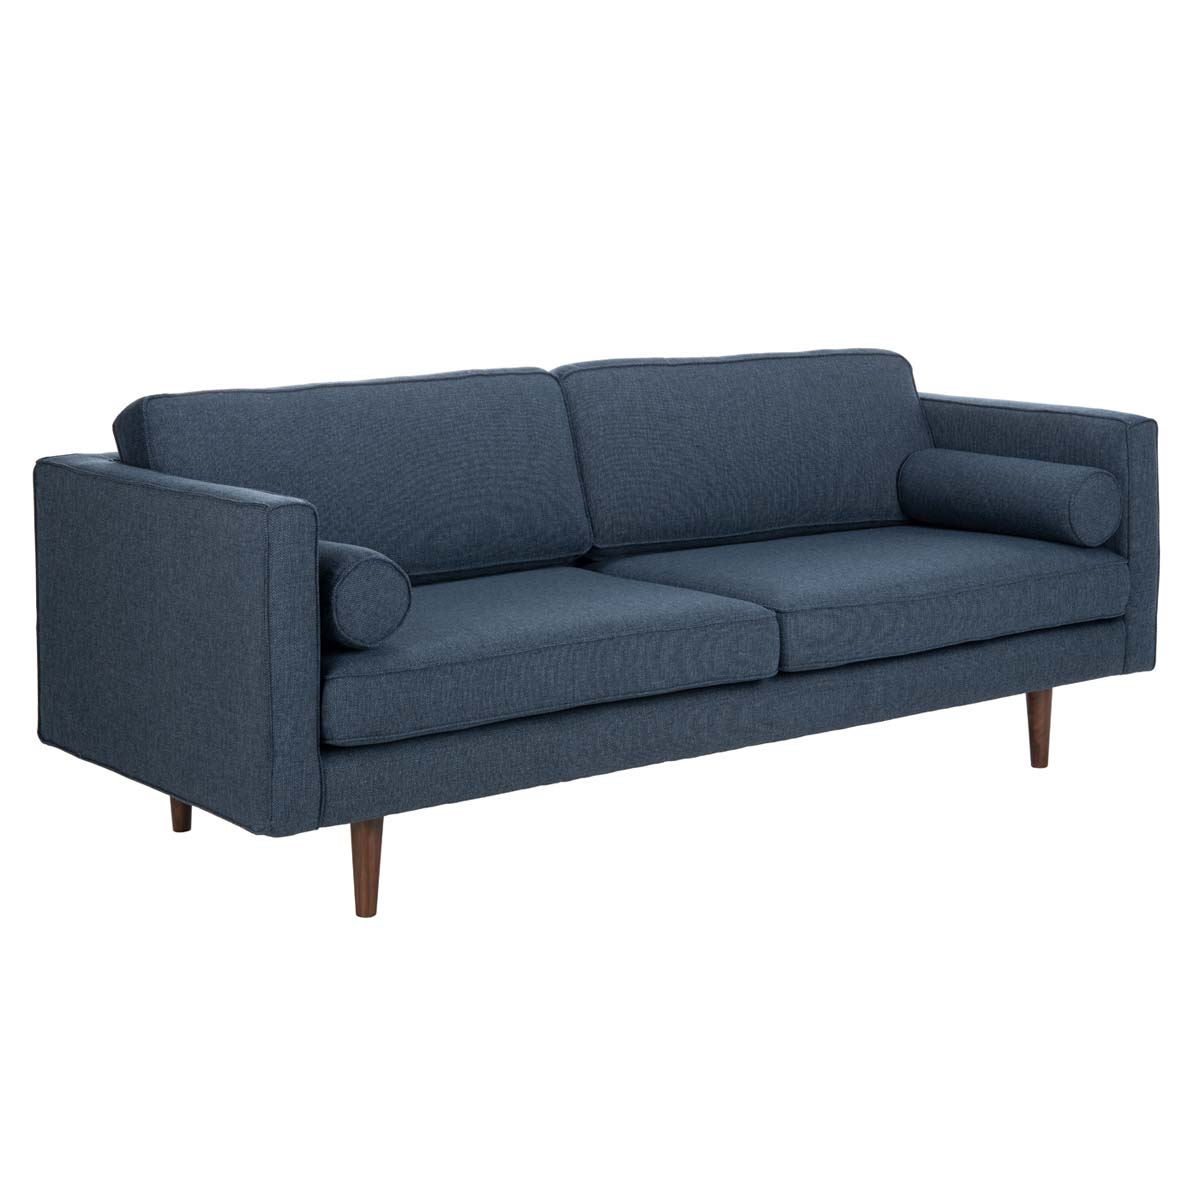 Safavieh Couture Hurley Mid Century Sofa - Dark Blue